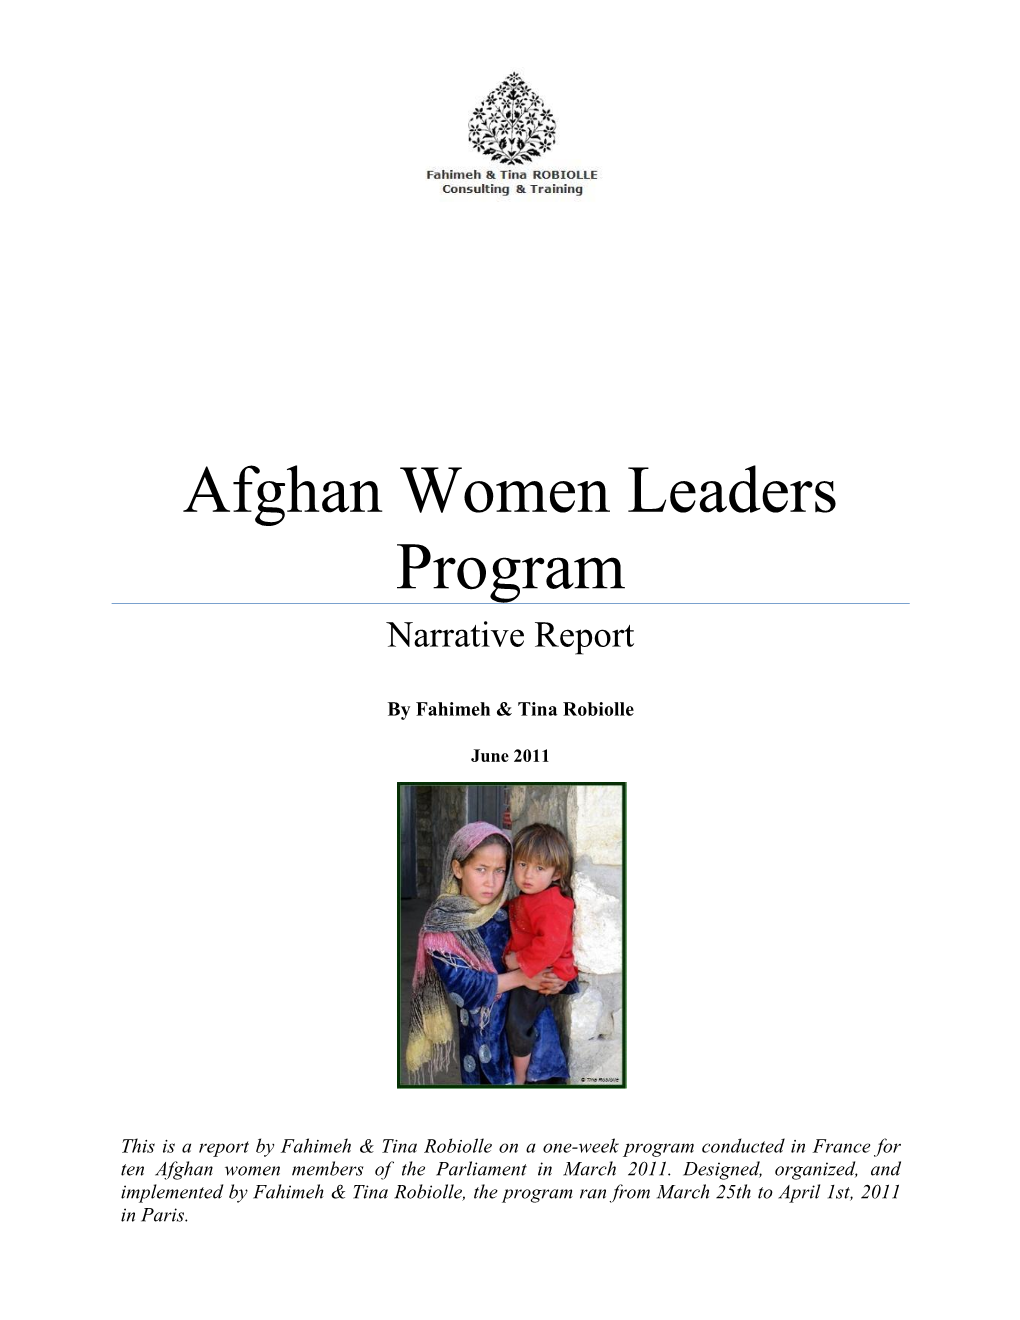 Afghan Women Mps Program in France 2011